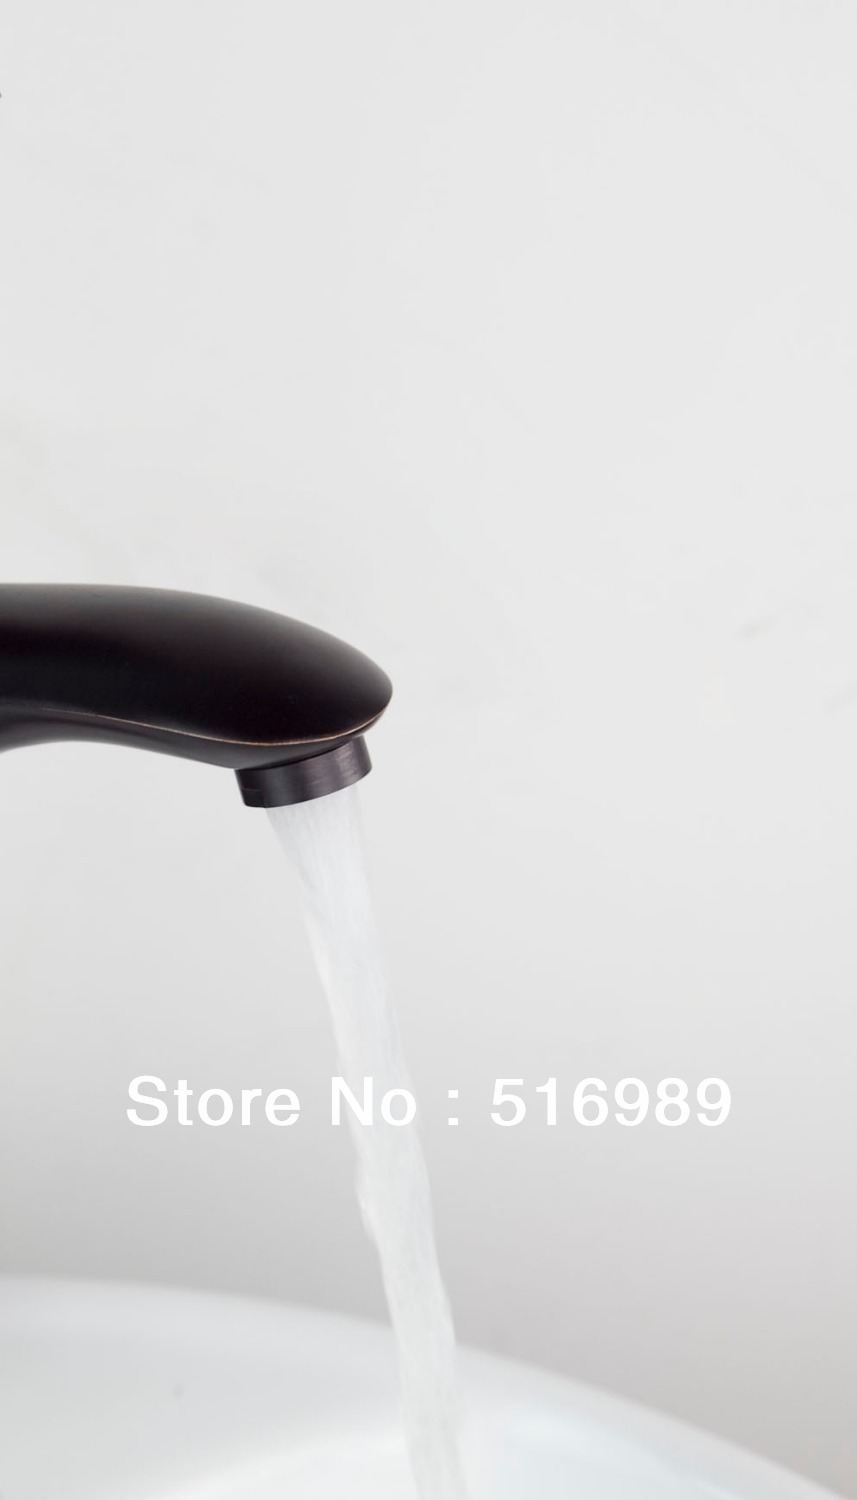 elegant bathroom orb faucet single handle deck mounted mixer tap tree371